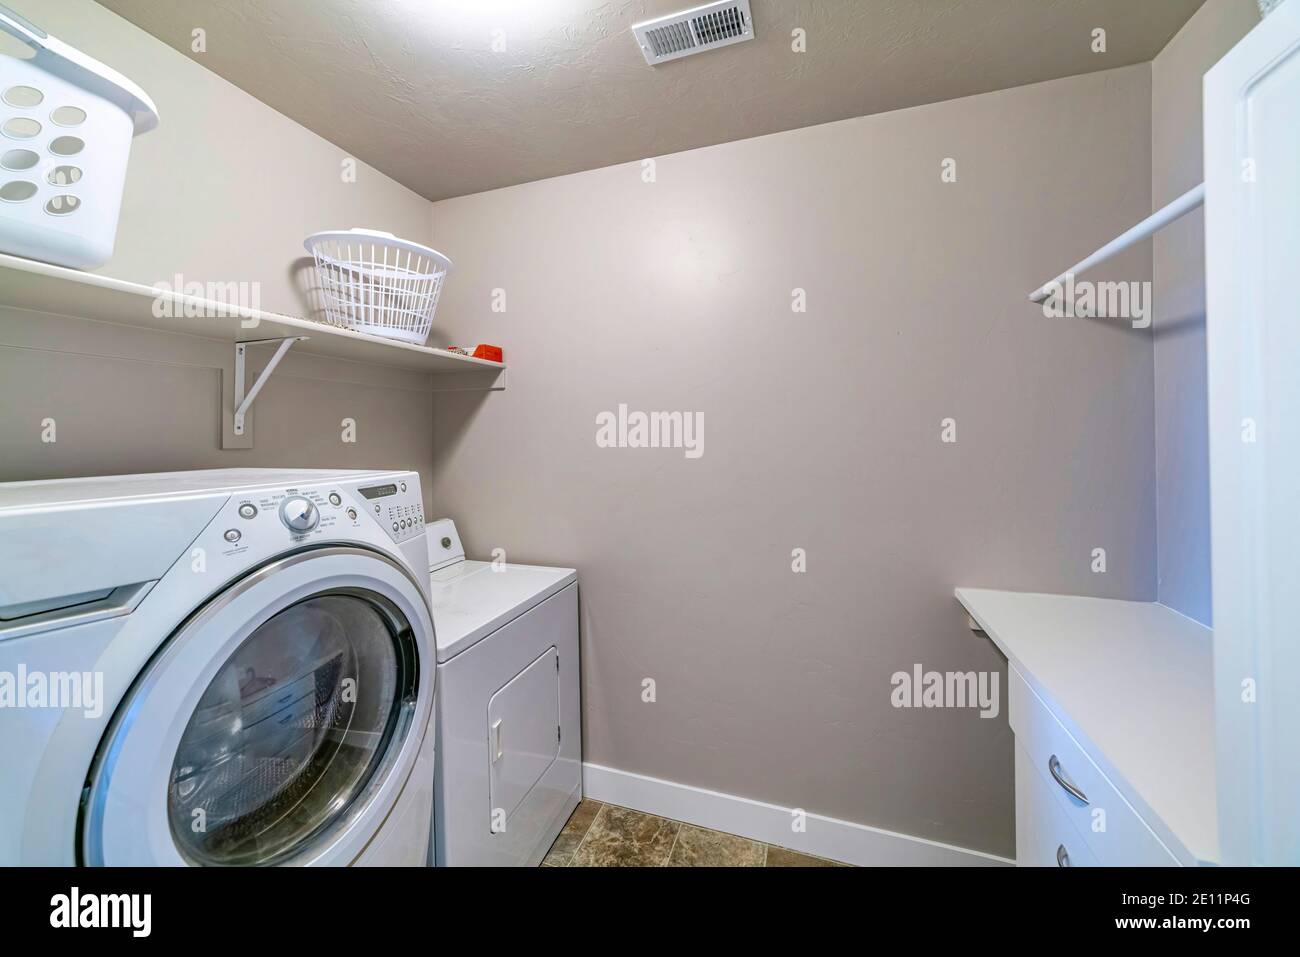 Laundry room of house with appliances storage bins wall shelf rod